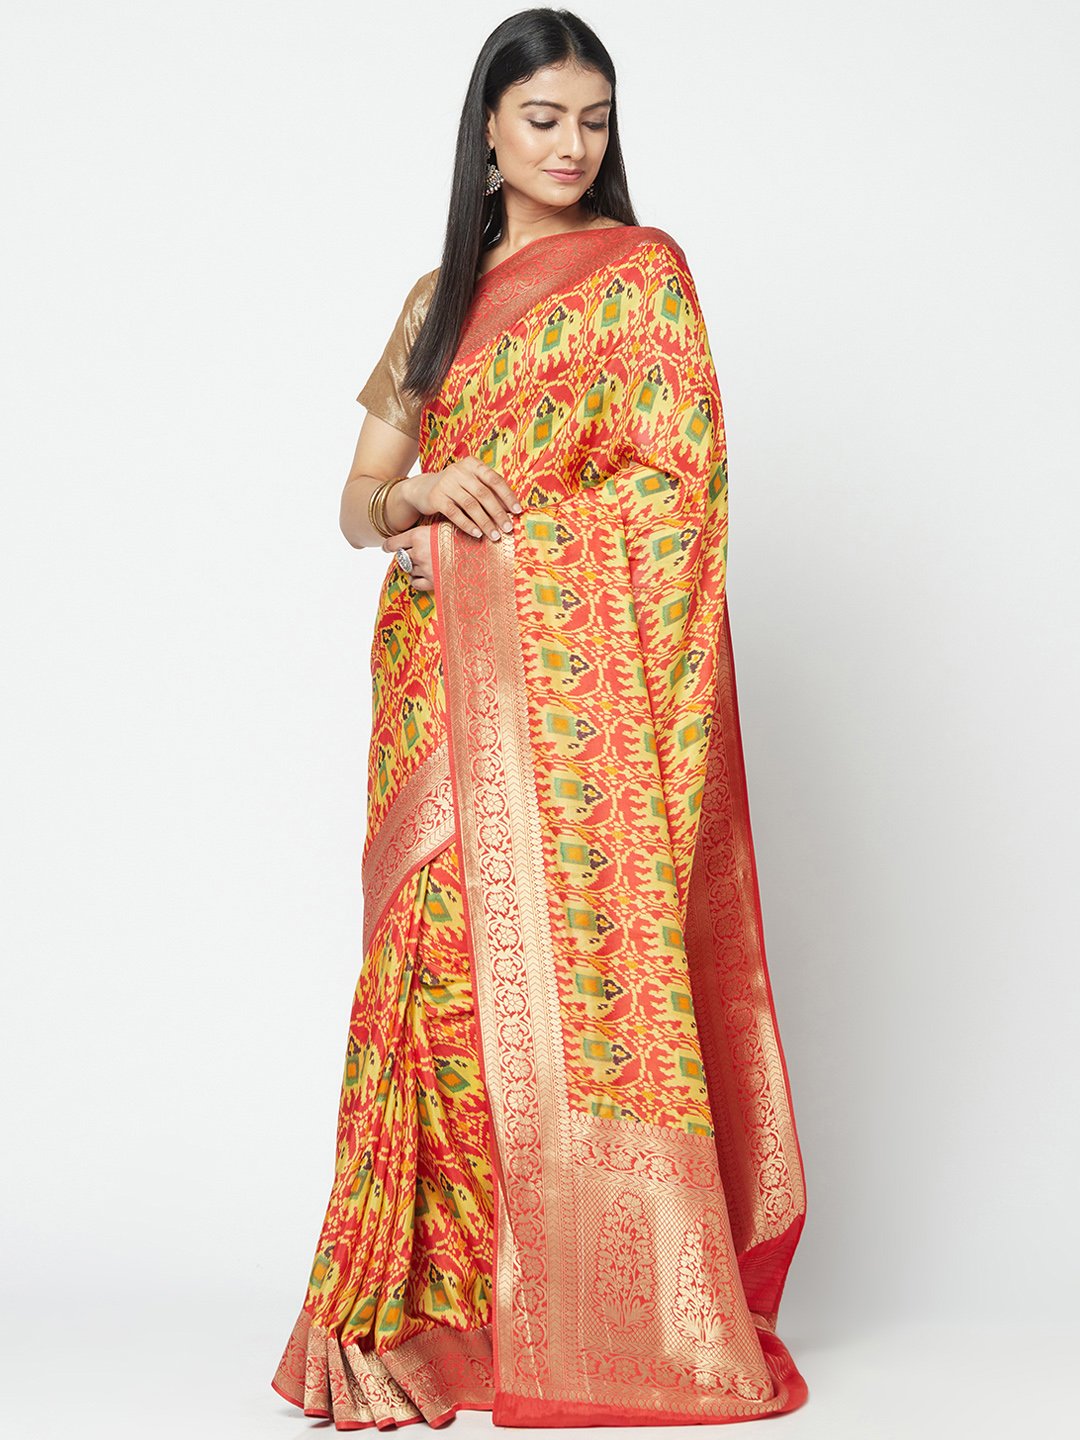 Handloom Saree In Multicolor For Festival